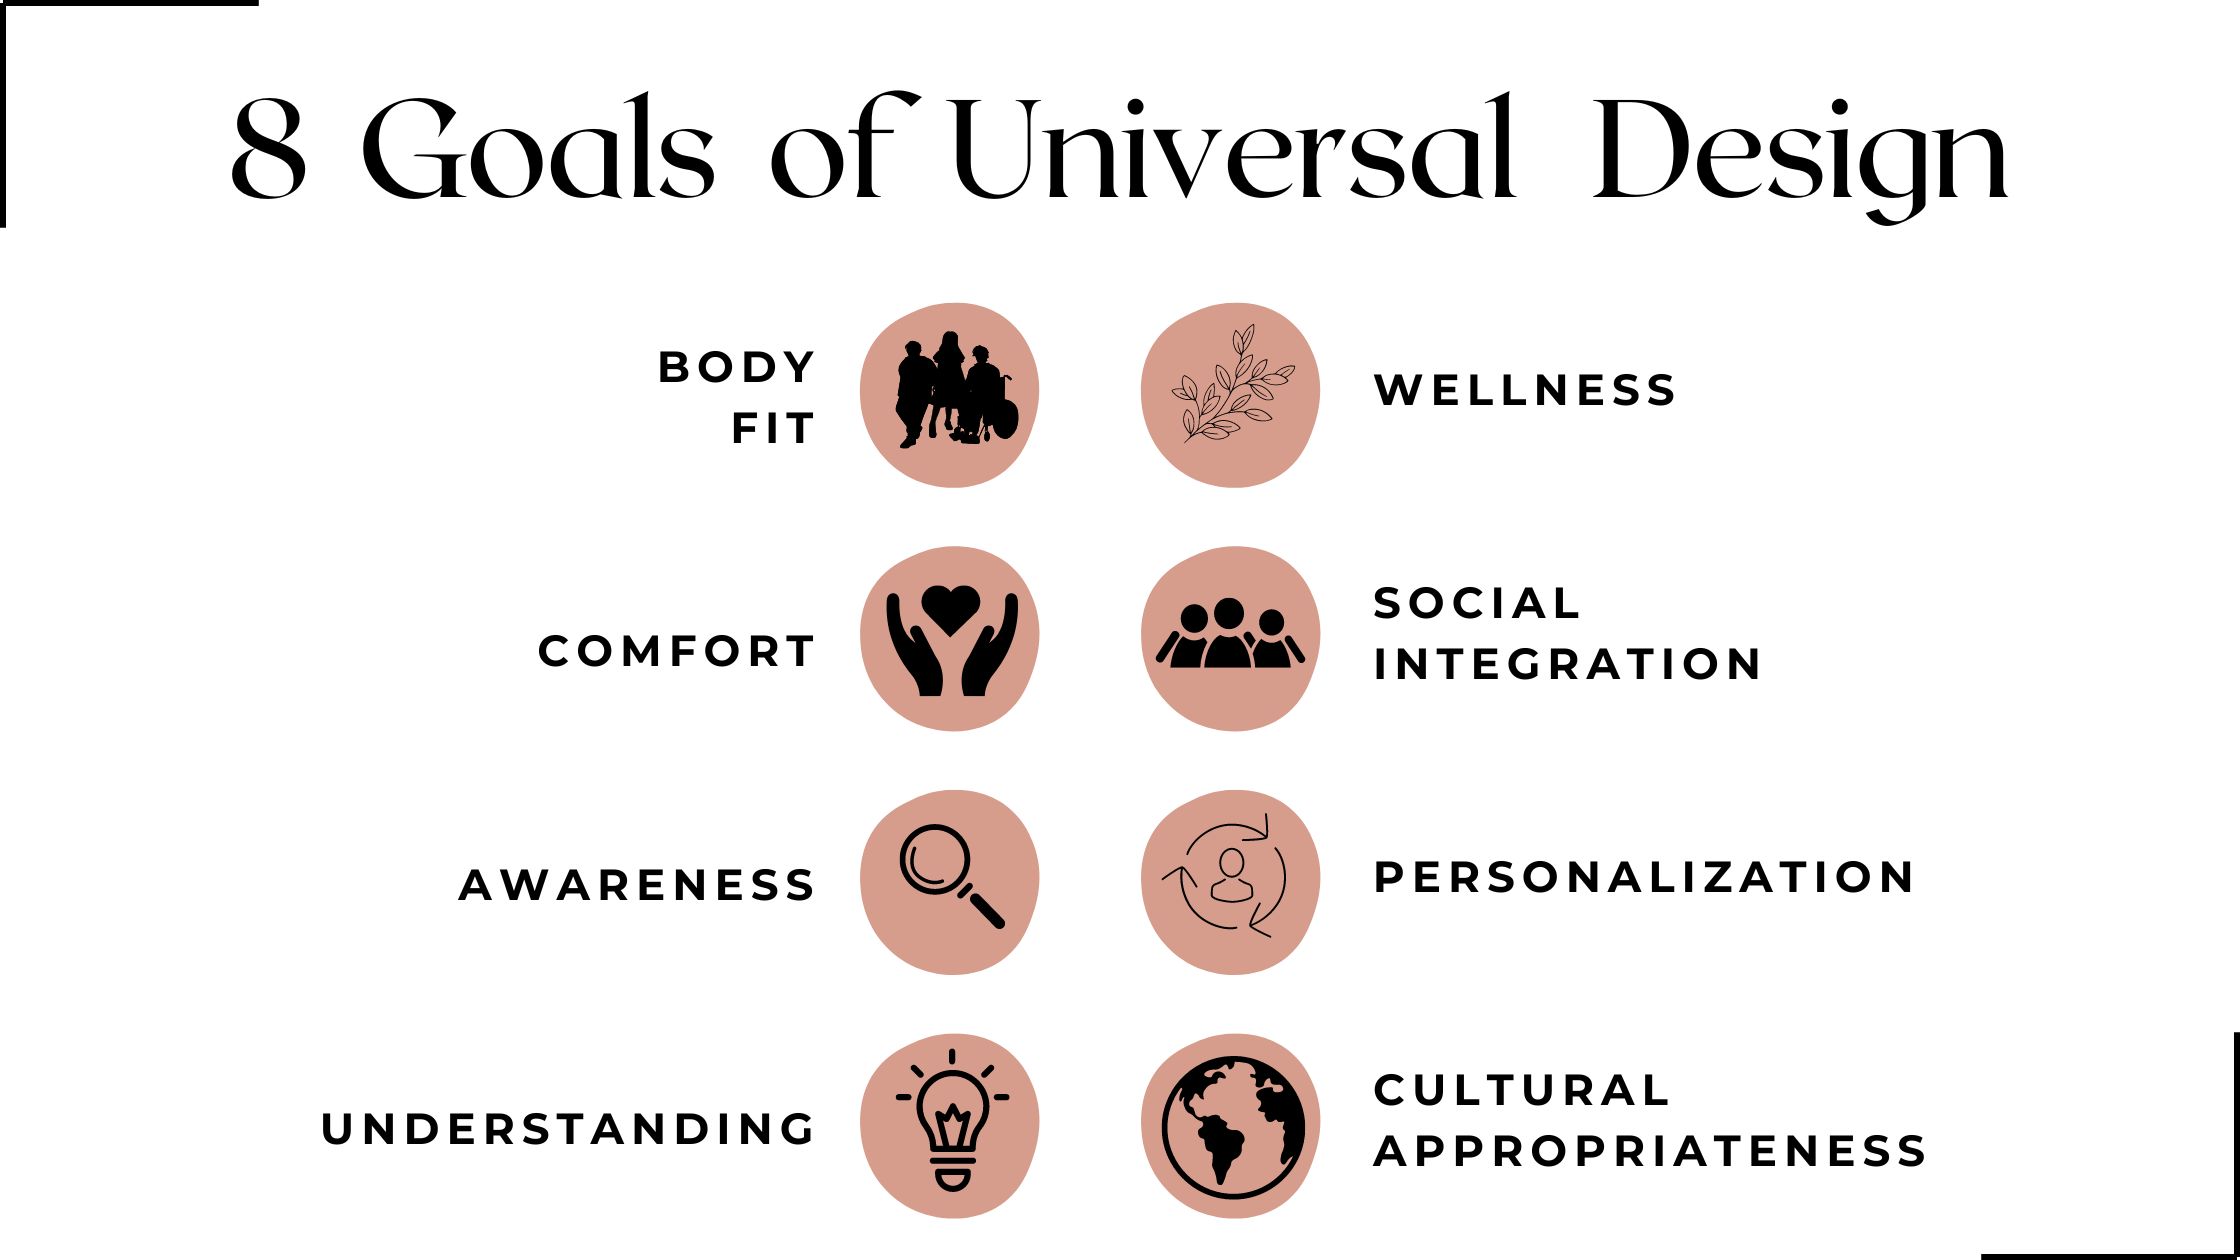 List of the 8 Goals of Universal Design.